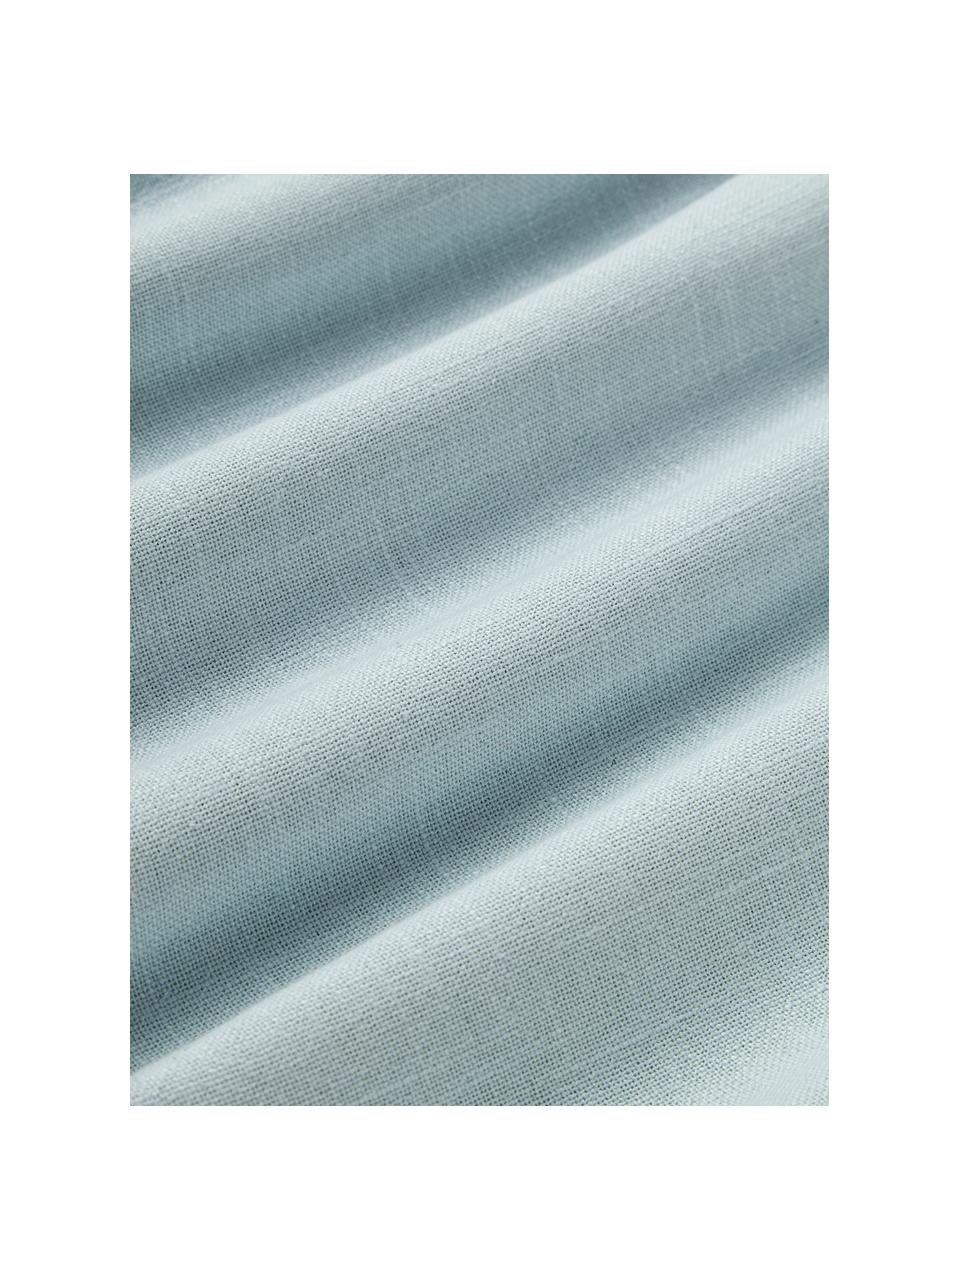 Baumwoll-Kissenhülle Vicky, 100 % Baumwolle, Hellblau, B 30 x L 50 cm